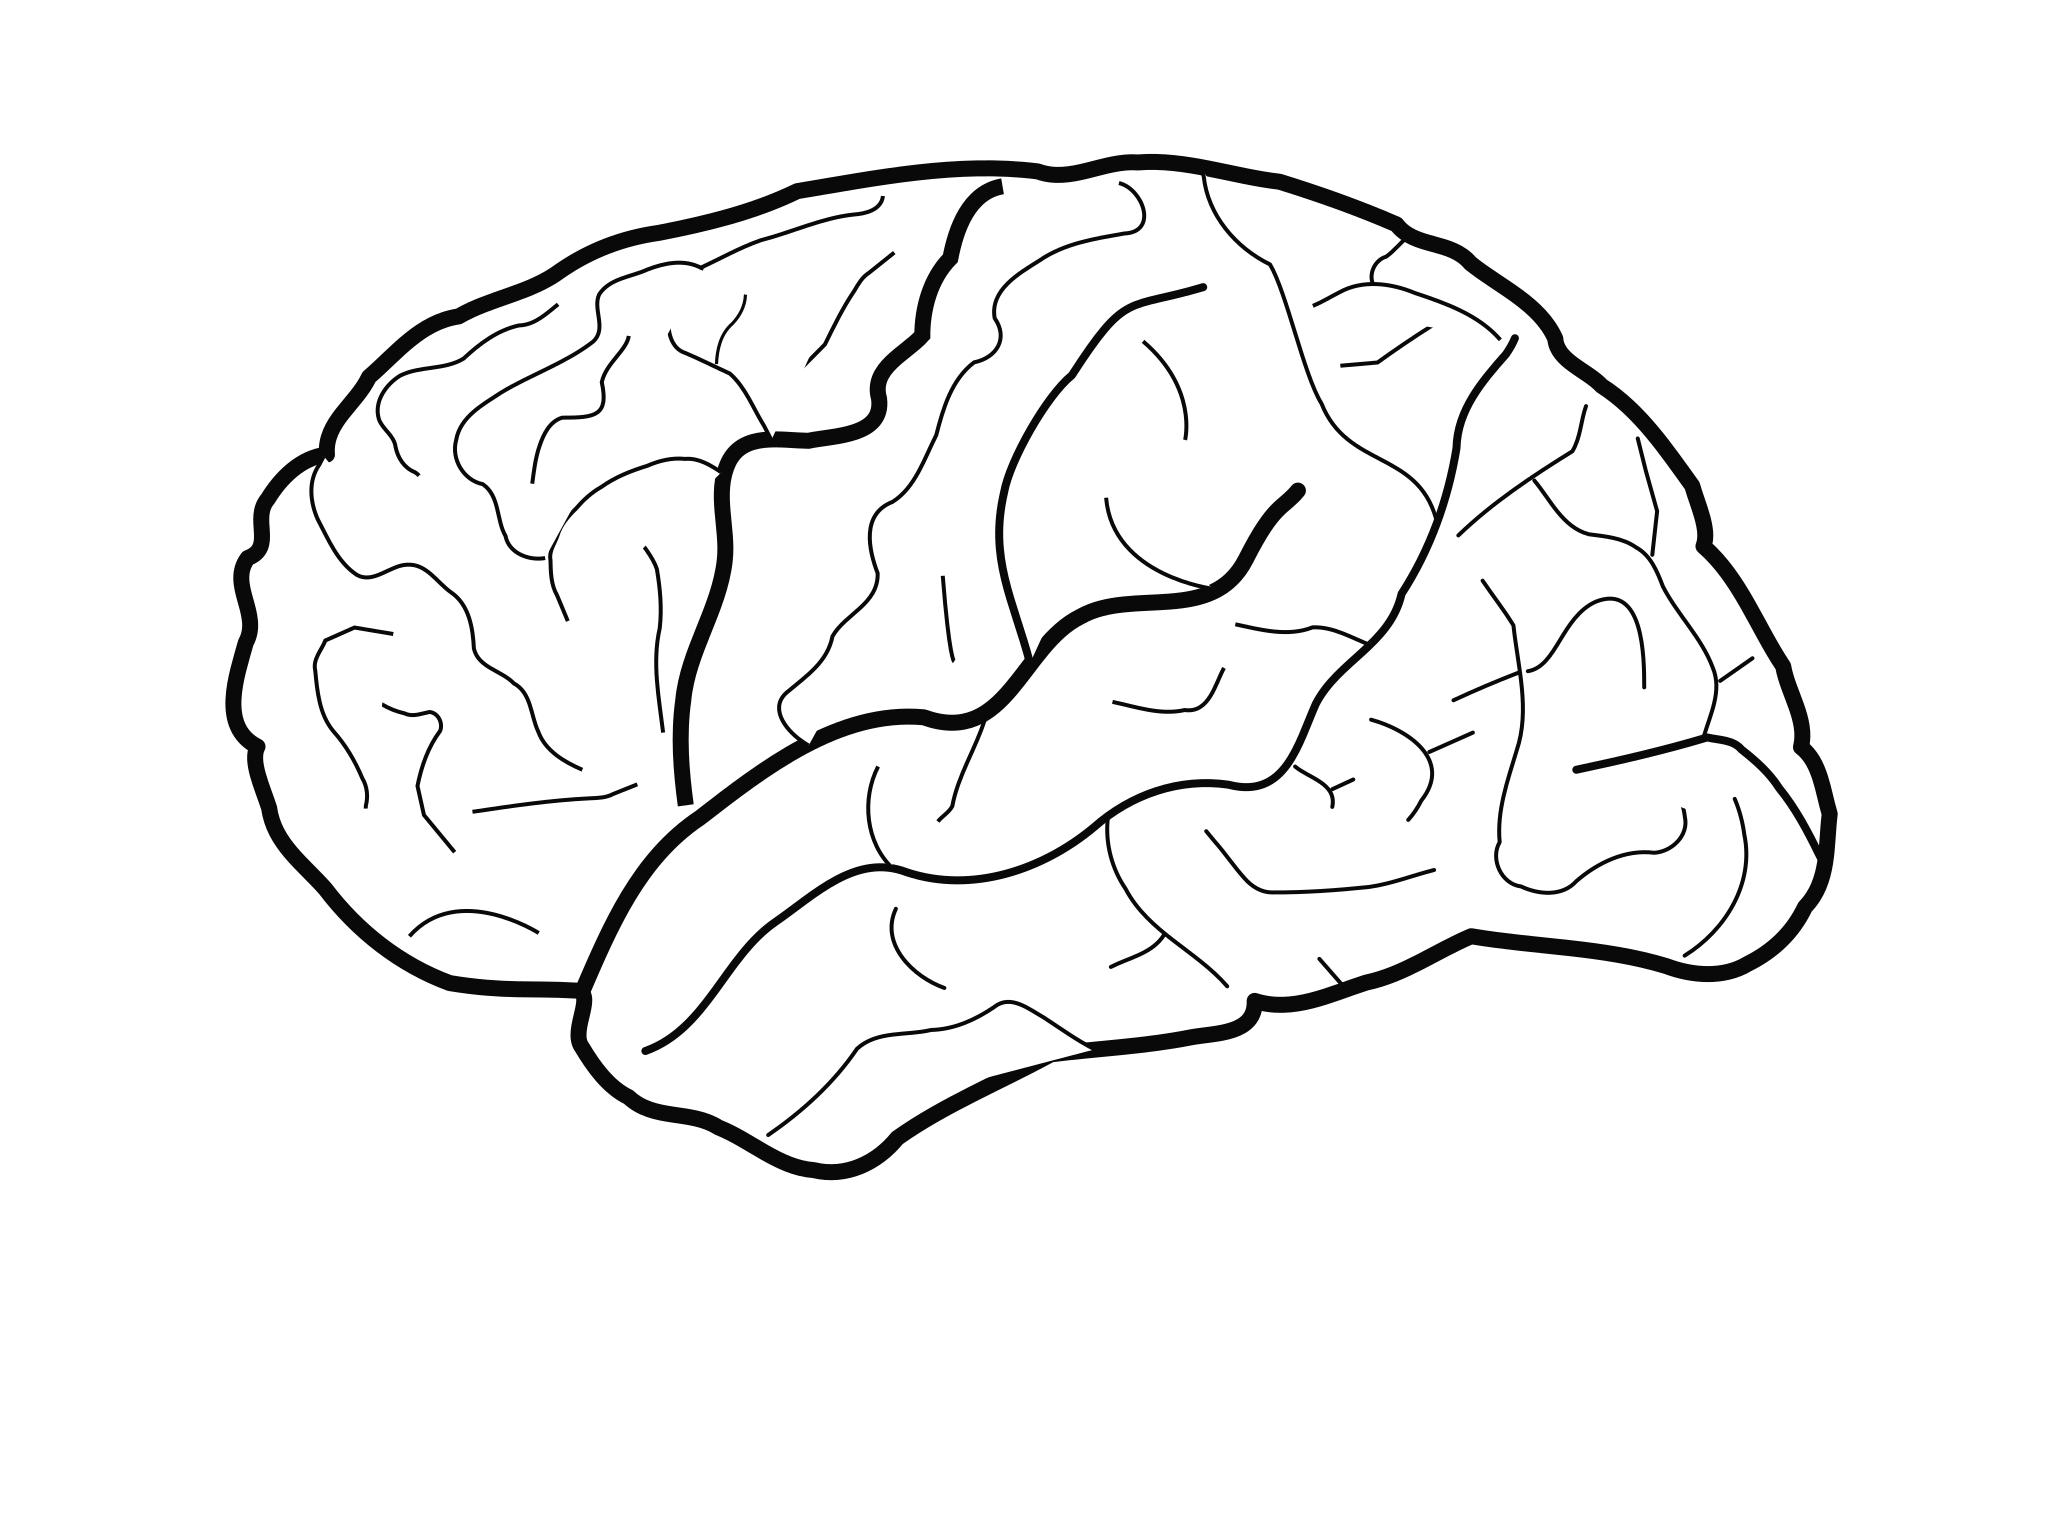 Рисунок мозга для срисовки